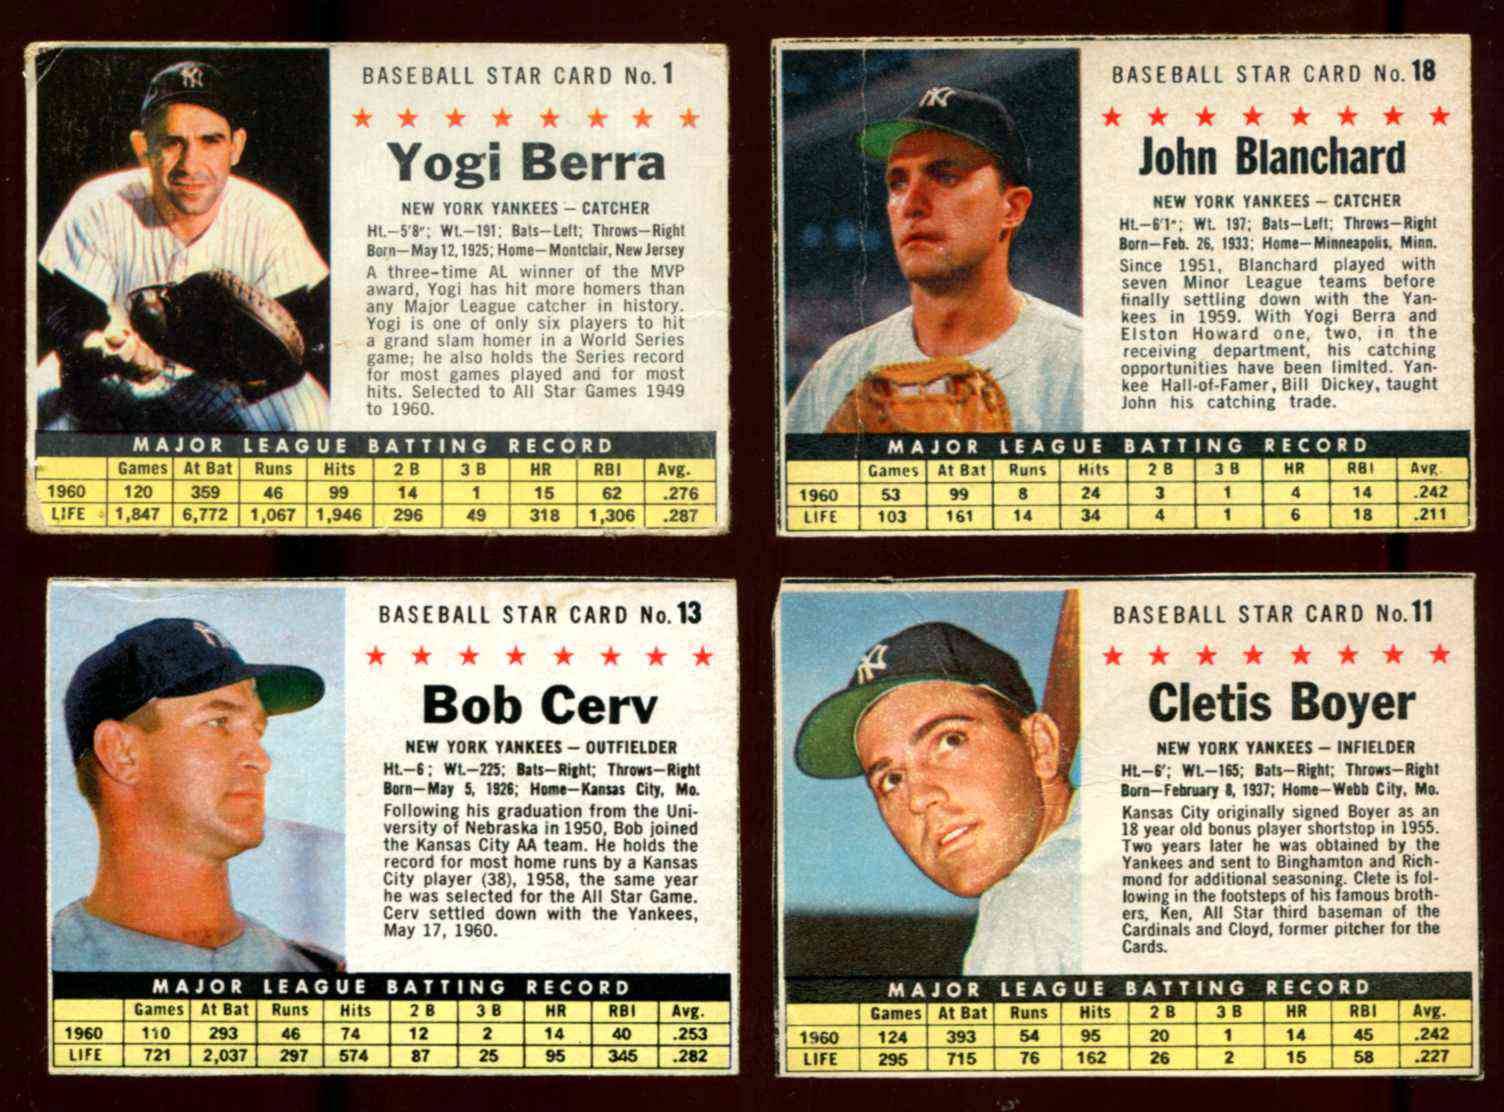  1961 Post - NY Yankees Team L of (4) different w/Yogi Berra ($40 bk) Baseball cards value